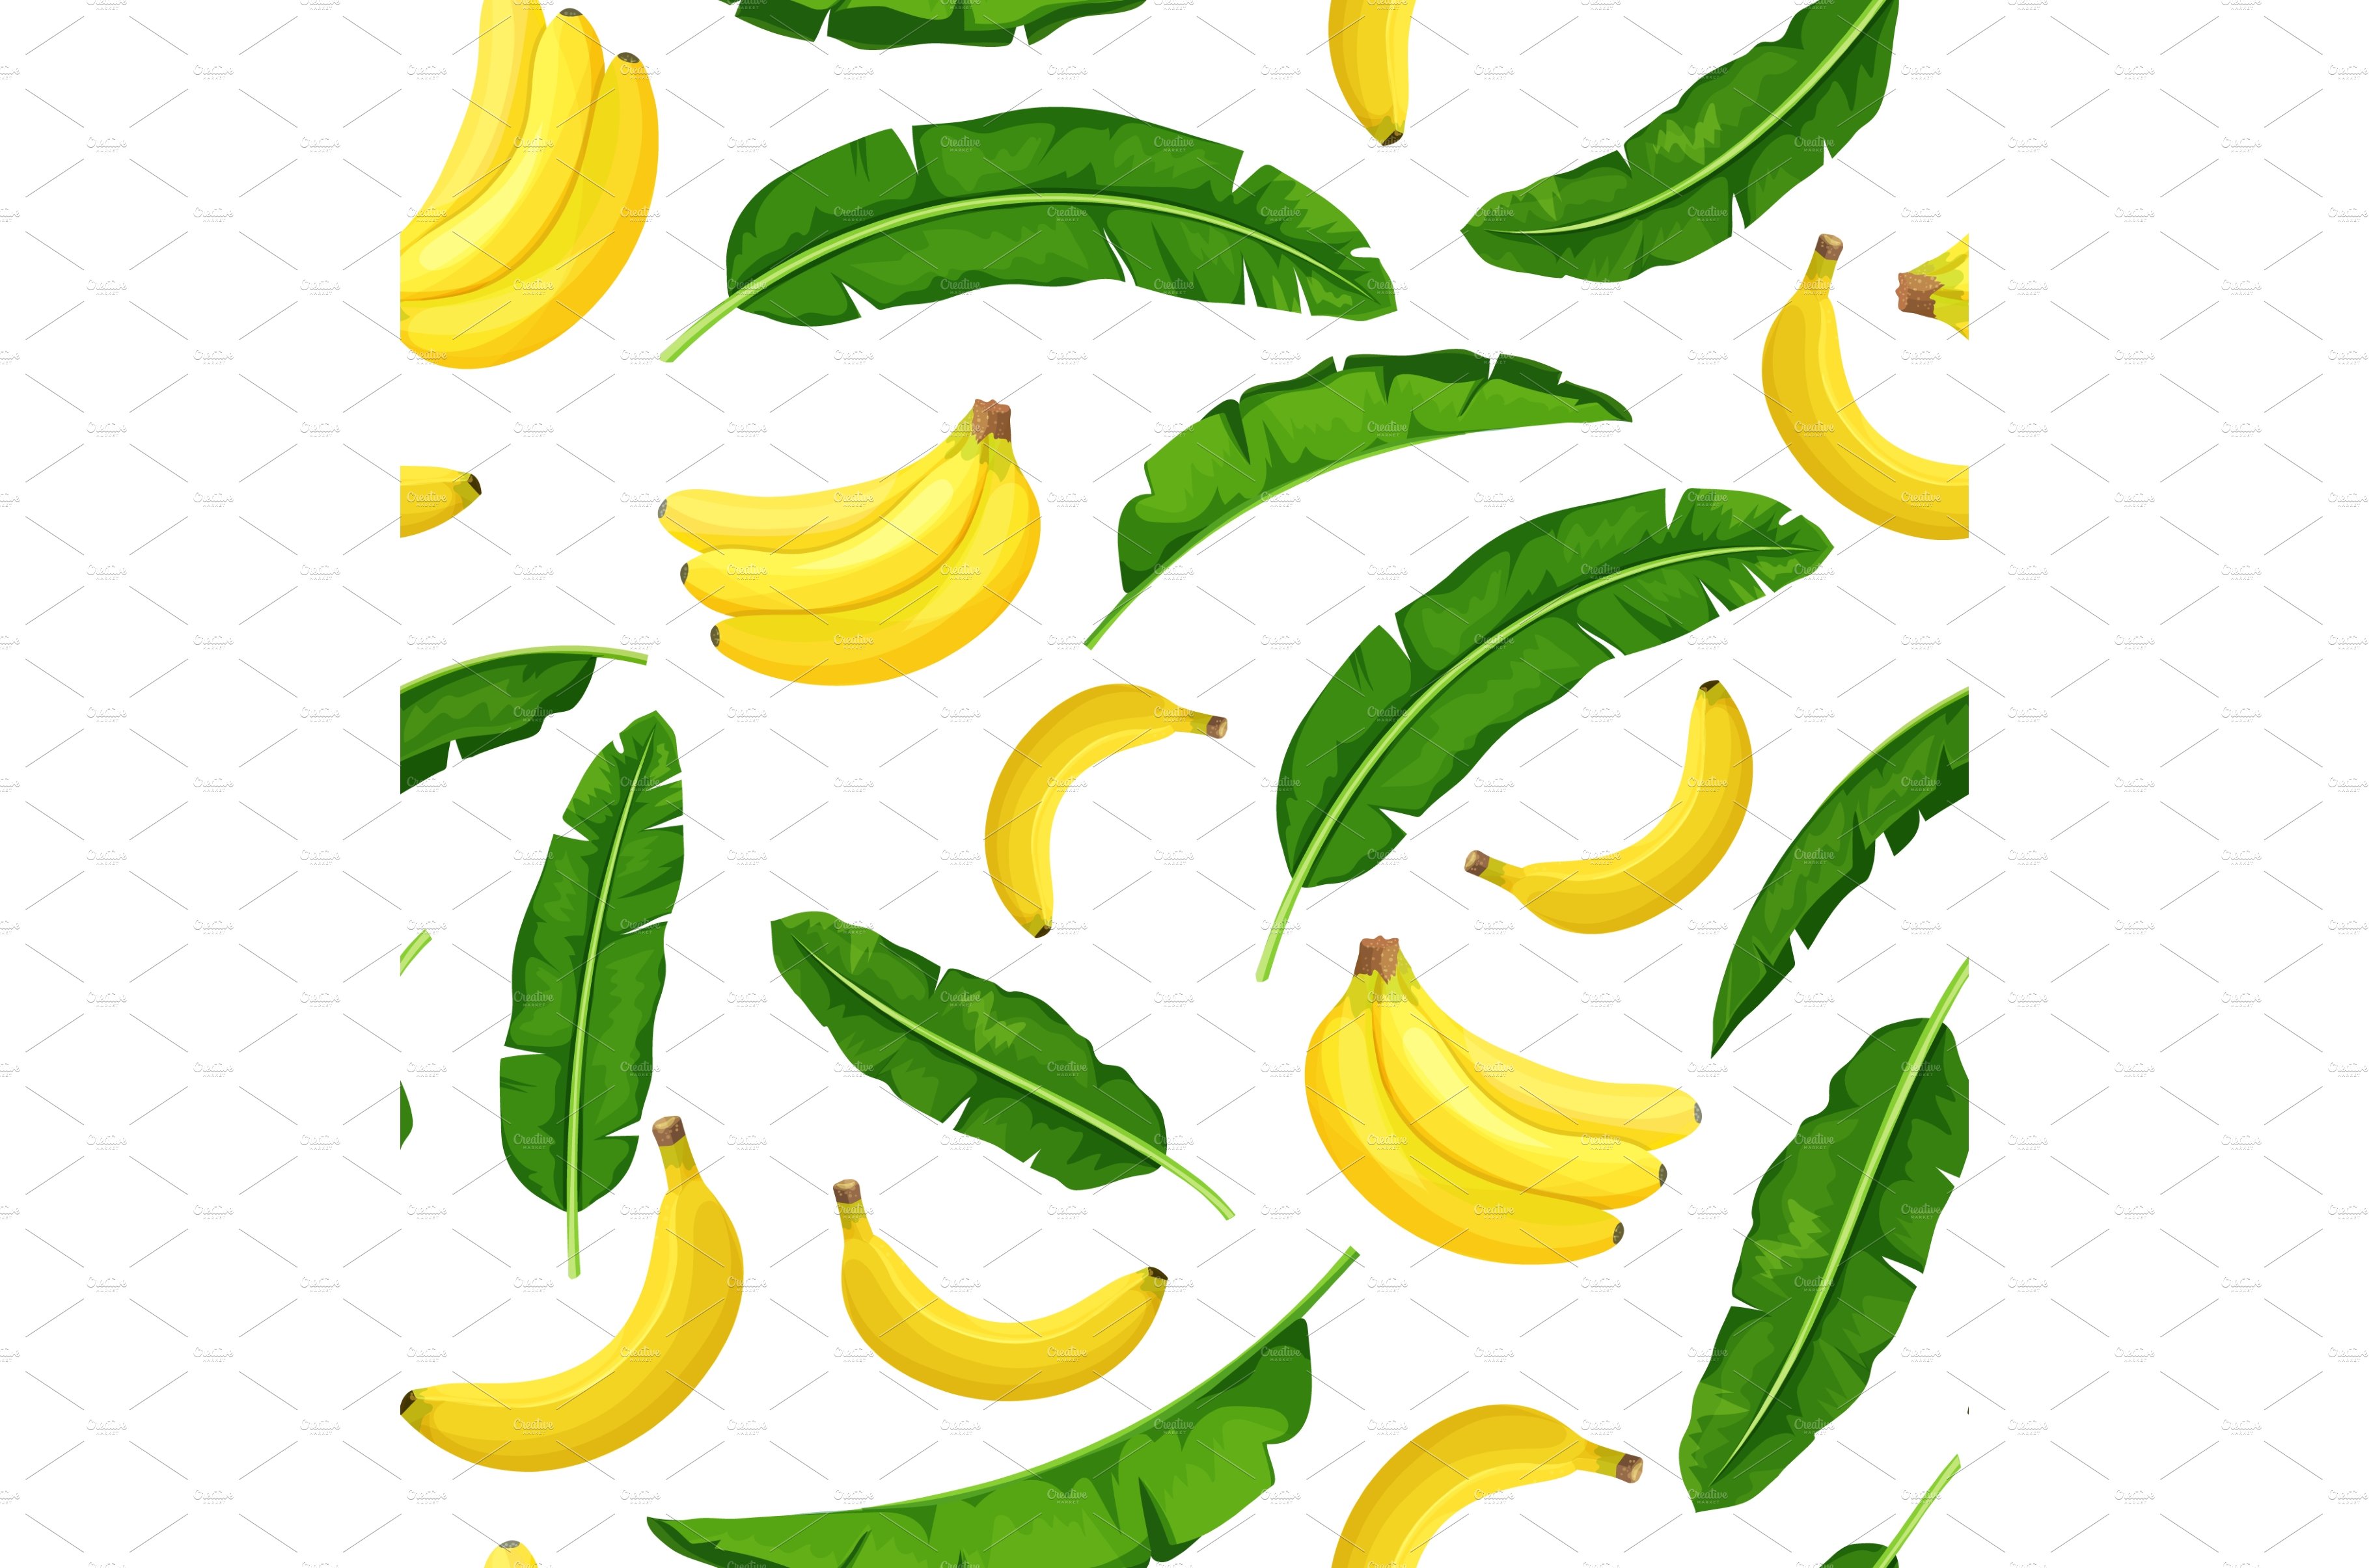 Banana Seamless Pattern cover image.